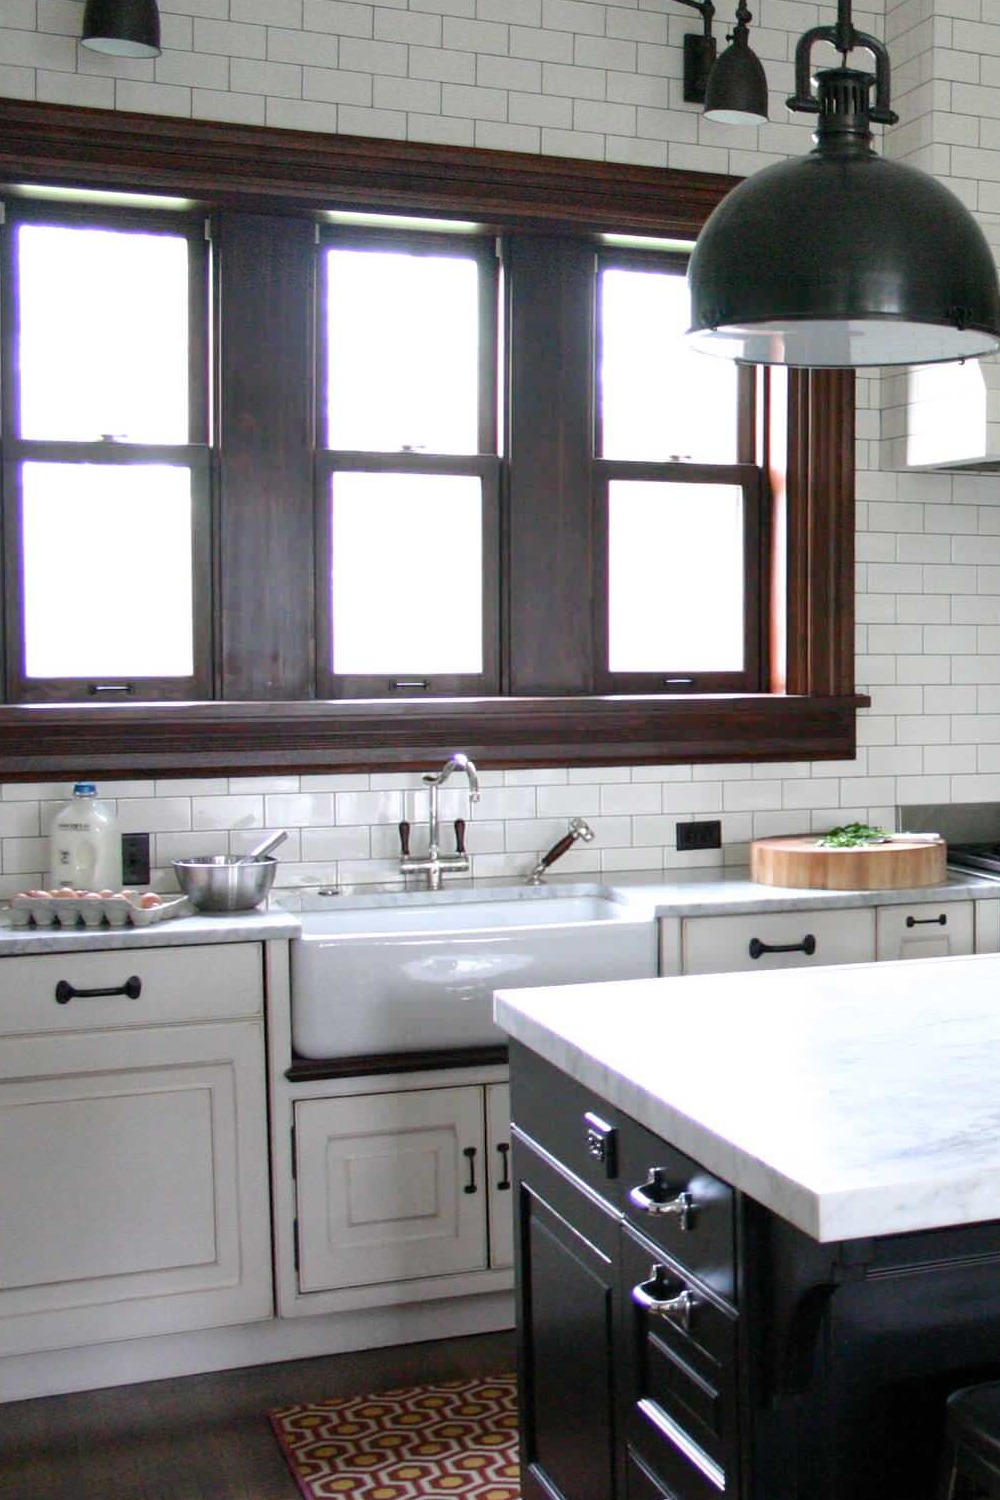 Glass Front White Cabinets Marble Countertops Subway Tile Backsplash Farmhouse Sink Dark Wood Floor